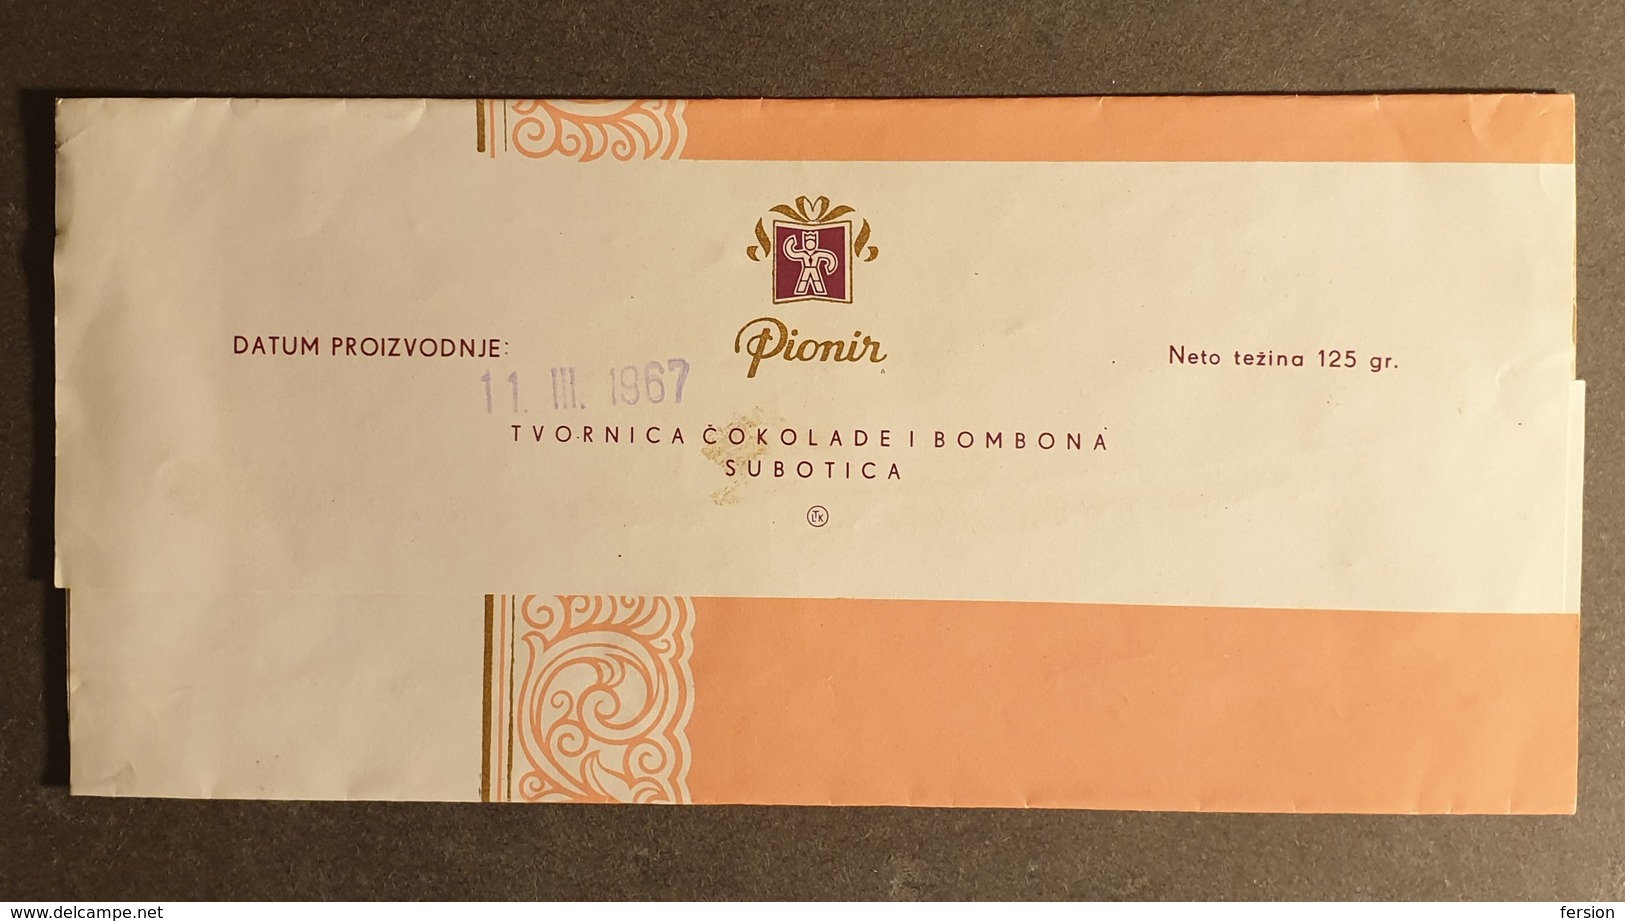 1967 Yugoslavia Serbia SUBOTICA Pionir - LABEL VIGNETTE Paper Package CHOCOLATE Rice - Chocolate